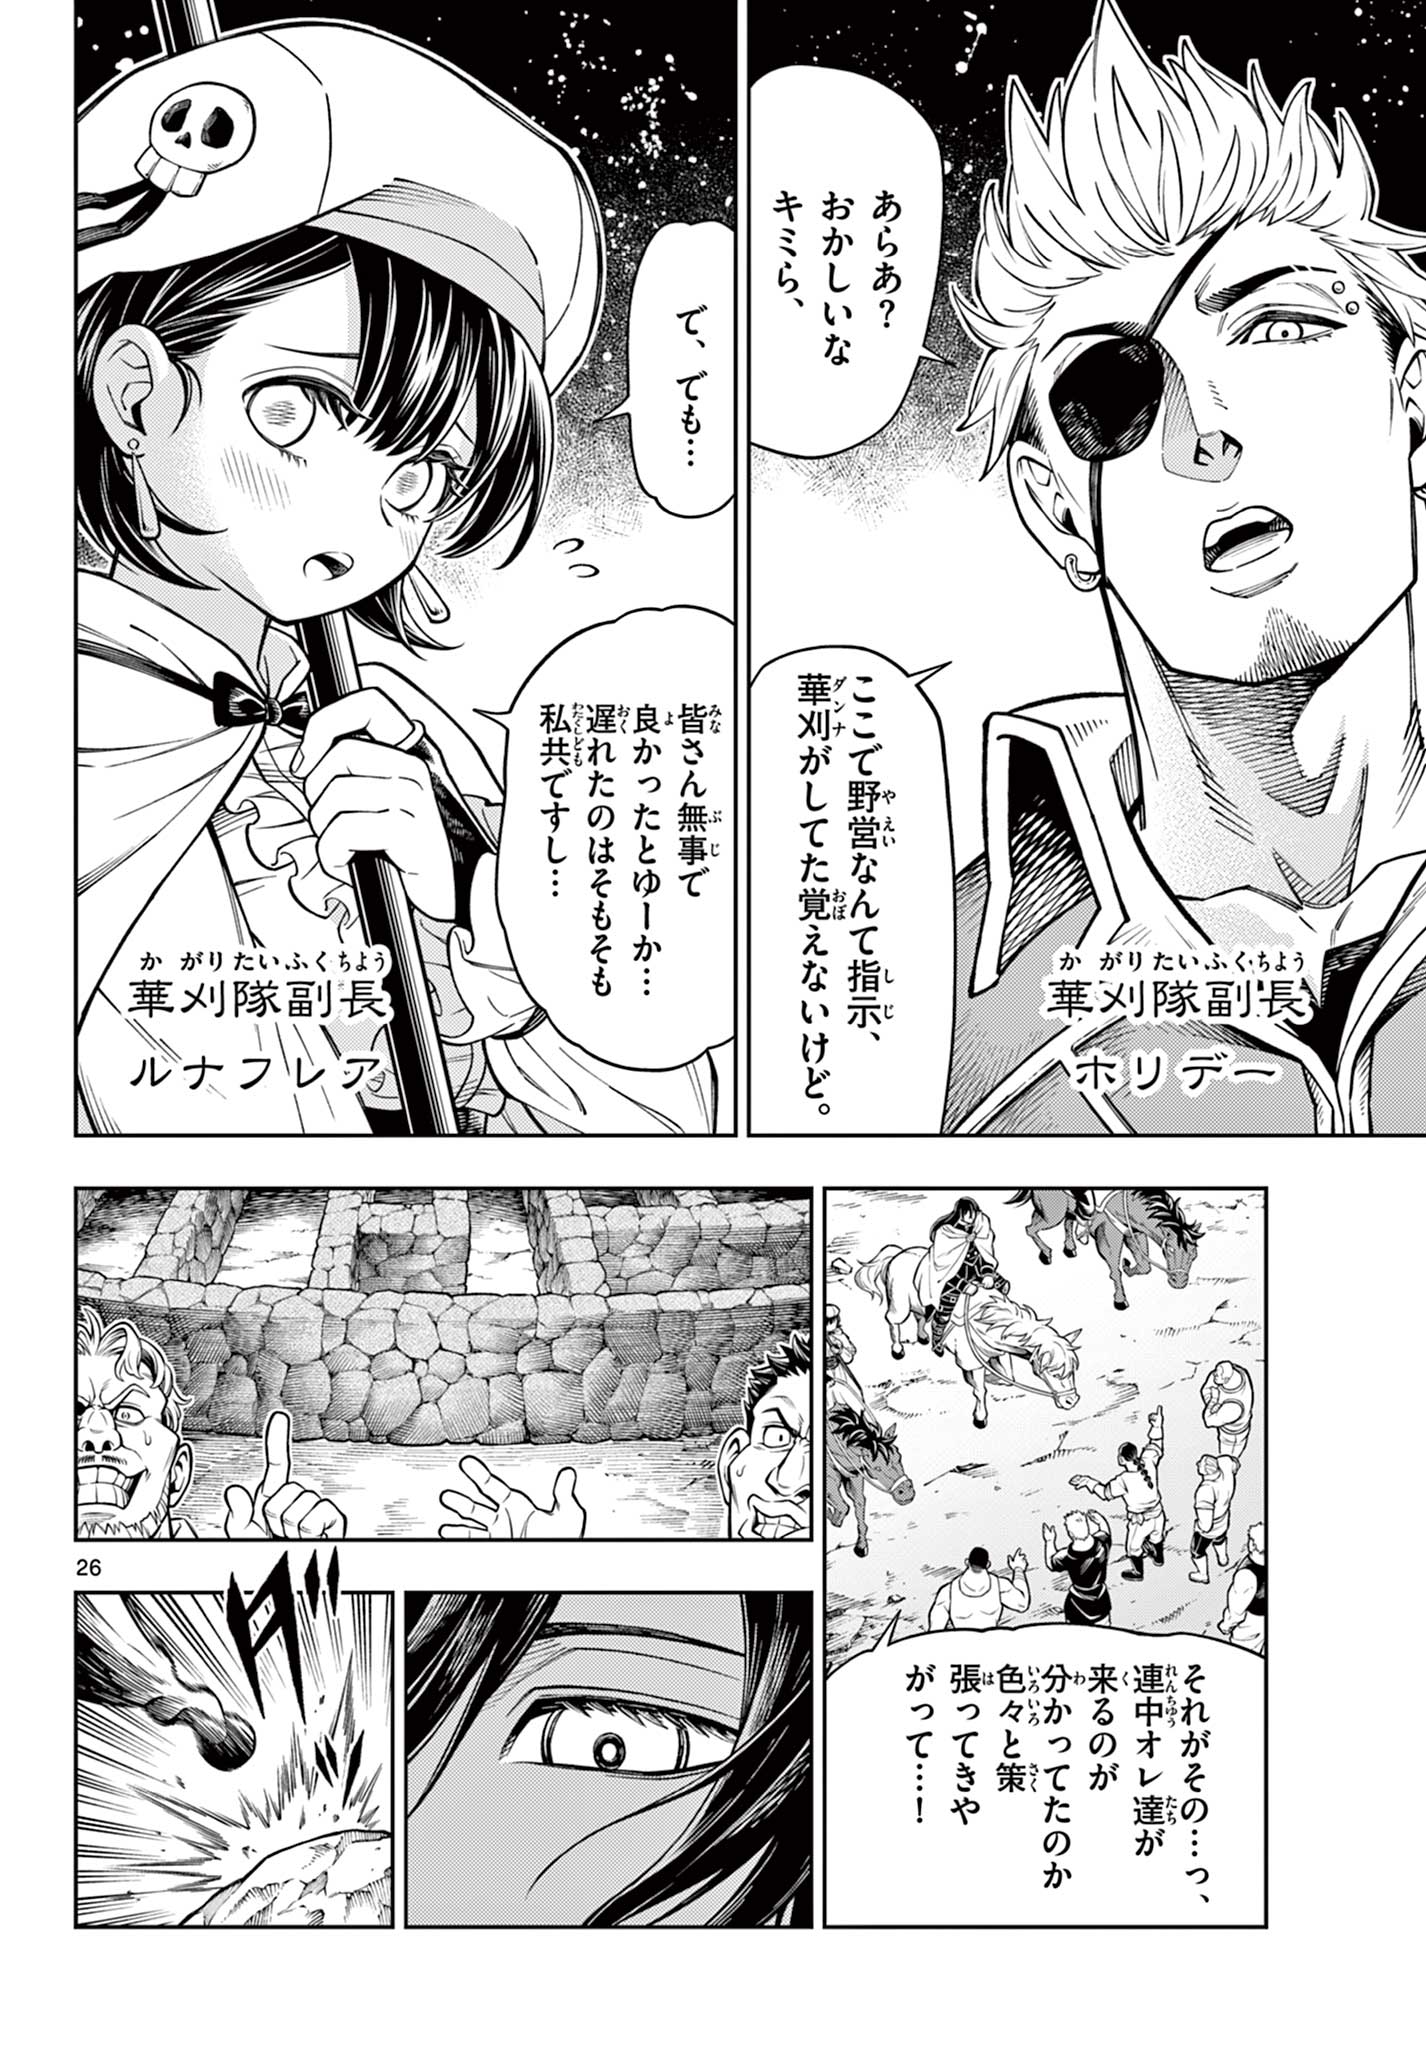 Soara to Mamono no ie - Chapter 27 - Page 26